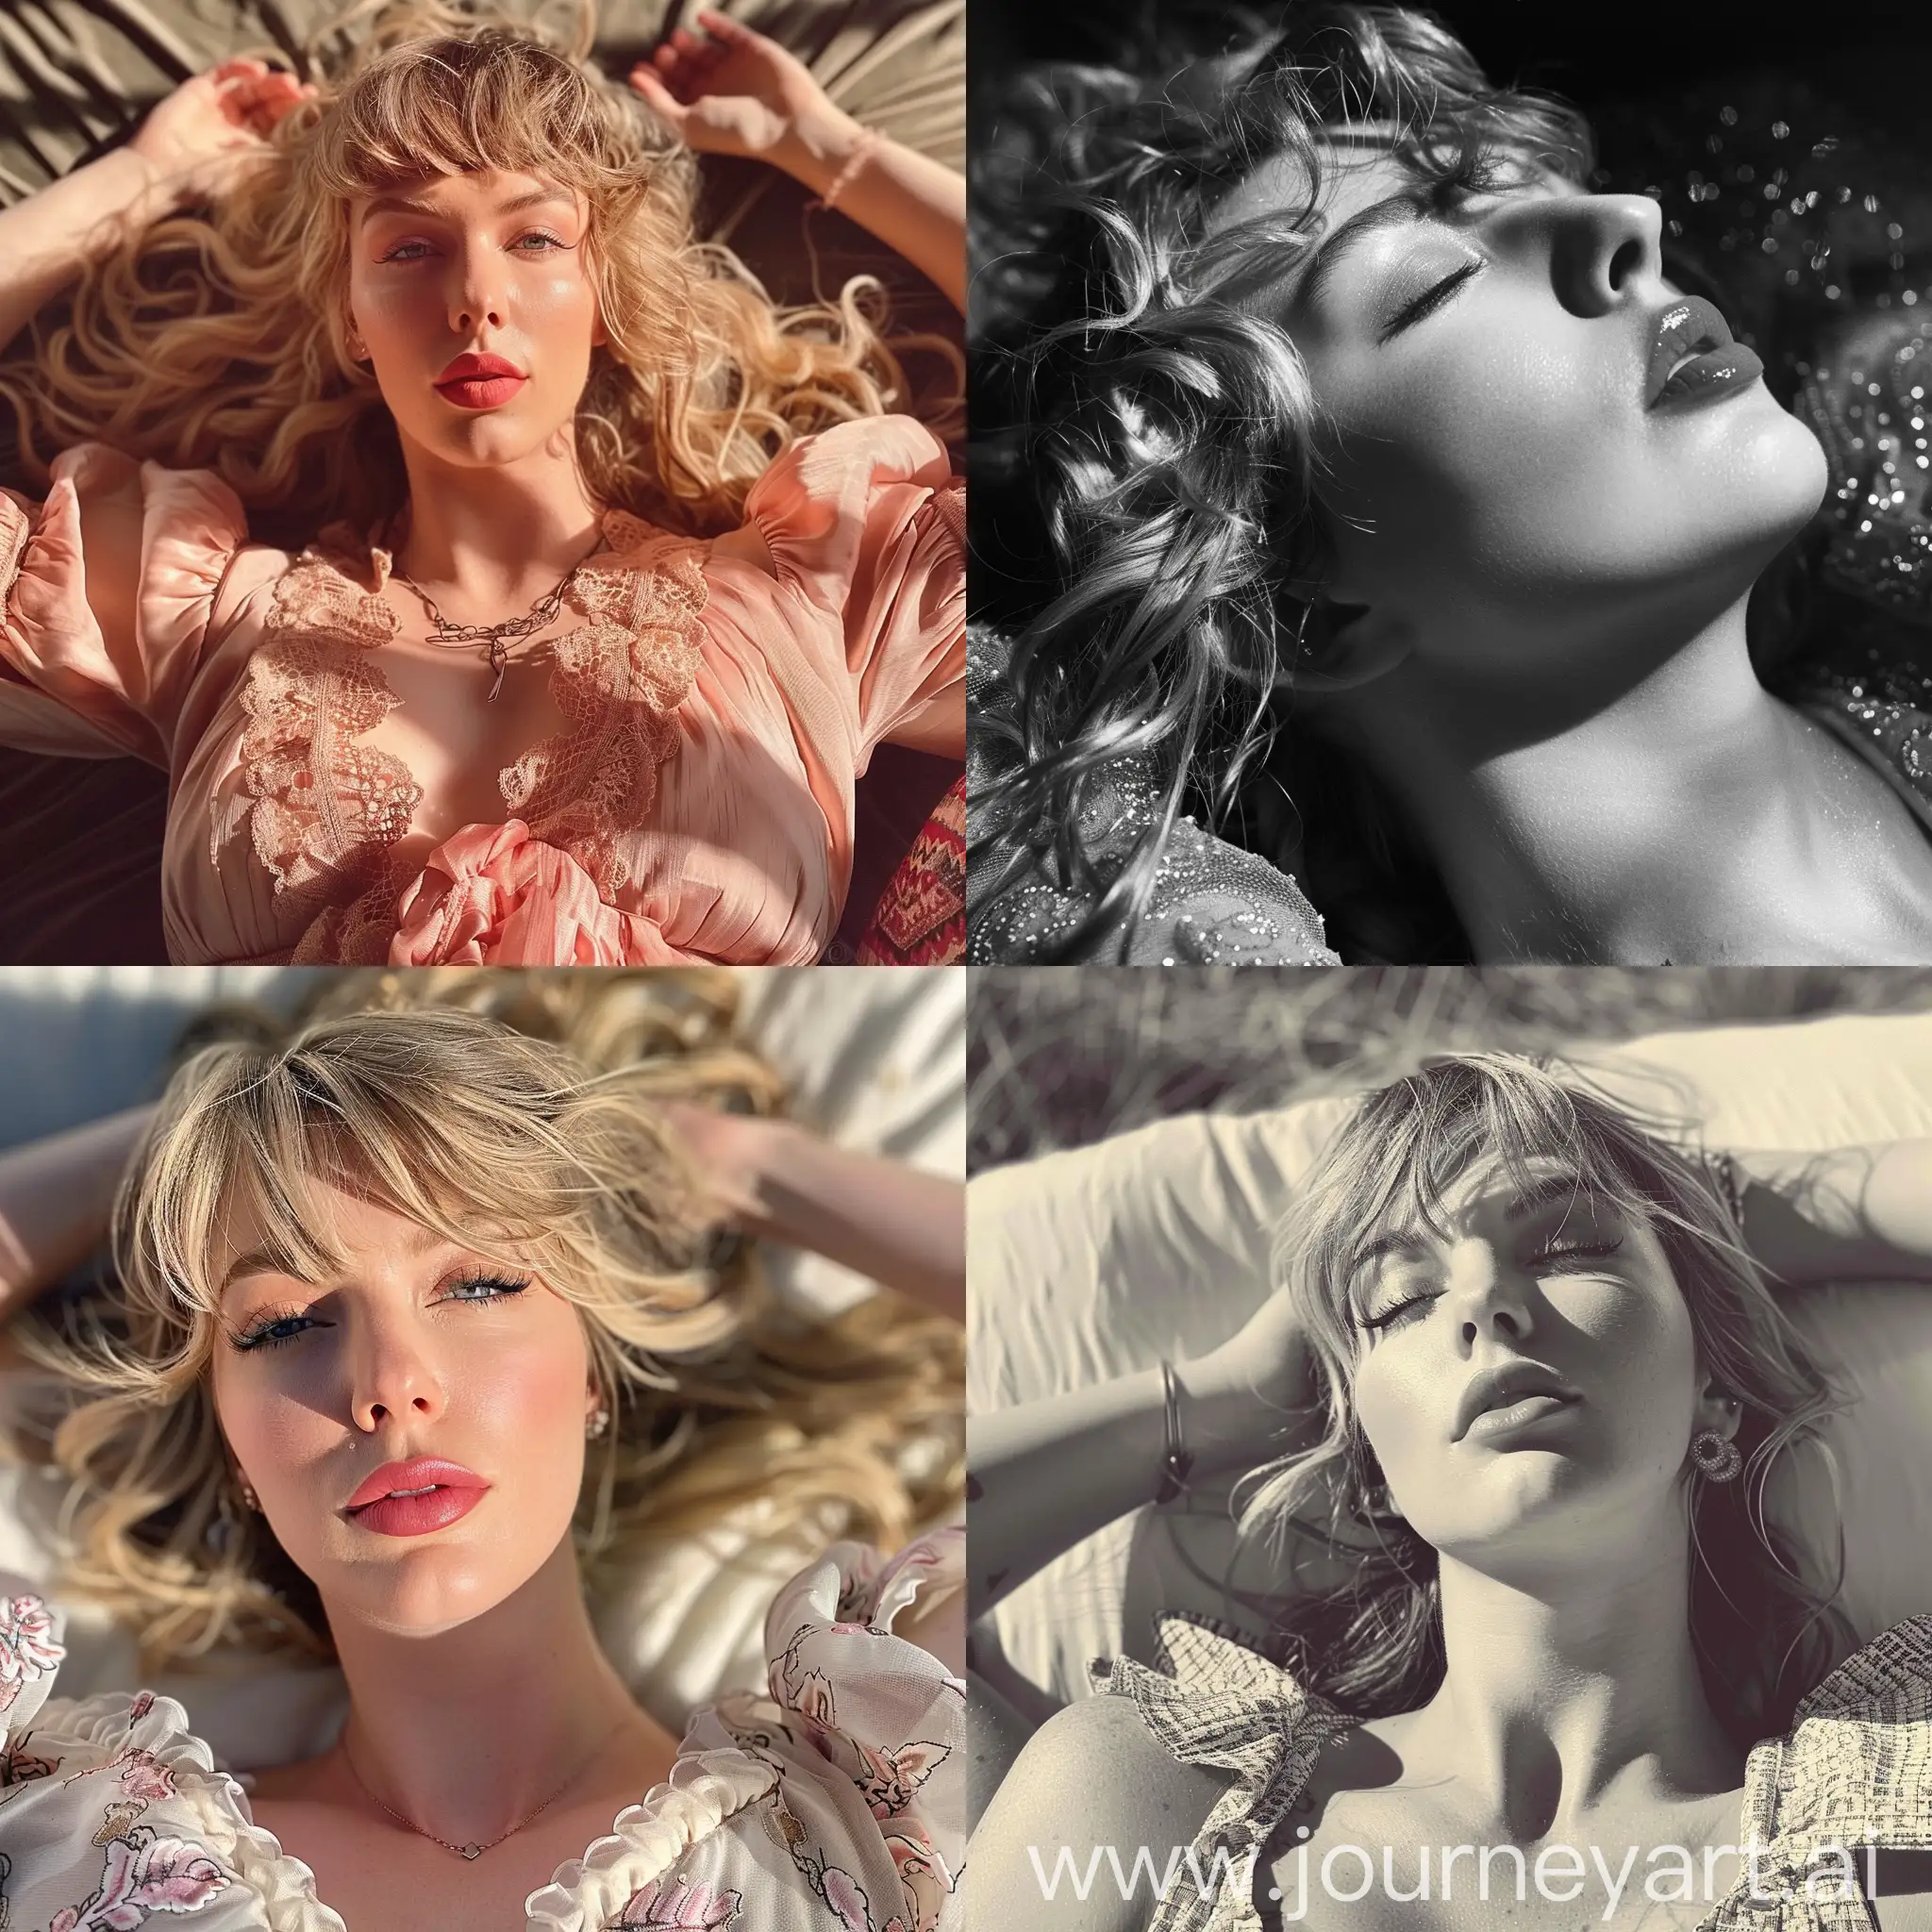 Taylor swift lying down